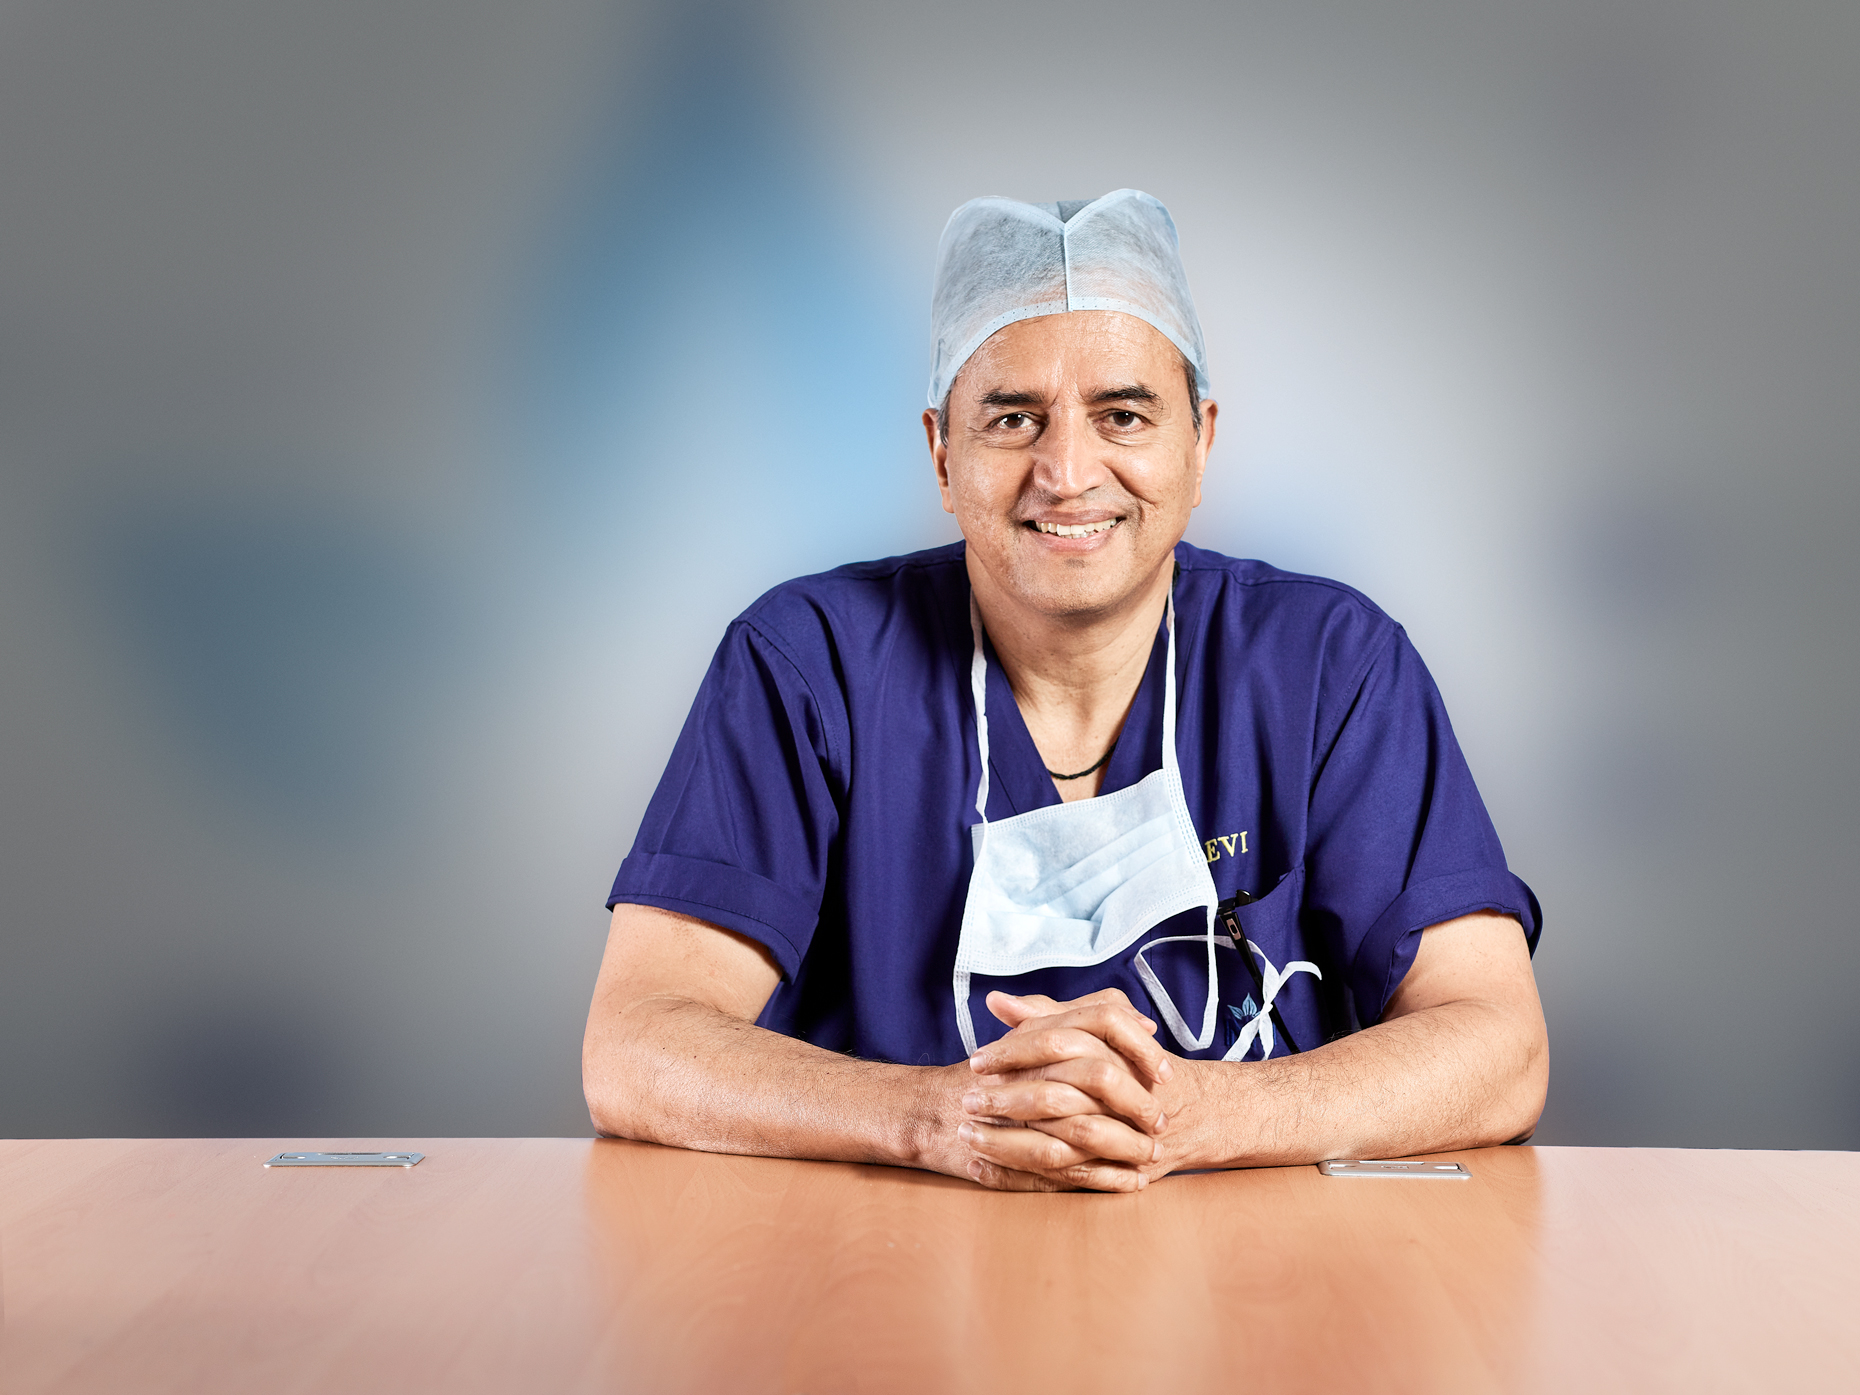 Commercial Executive Portrait of Doctor Devi Shetty for an International Magazine By Arindom Chowdhury